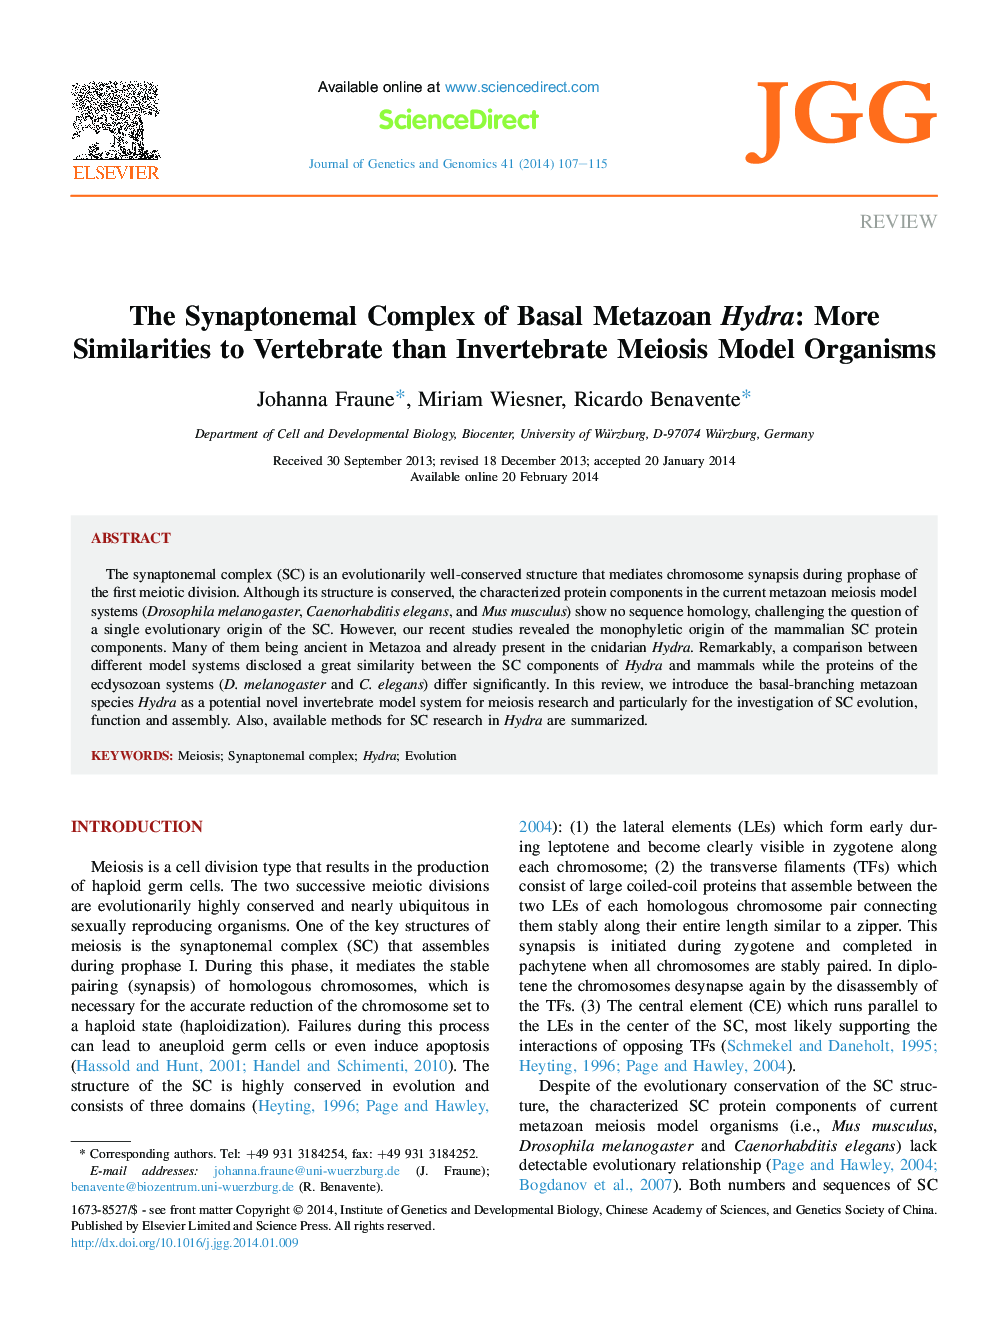 The Synaptonemal Complex of Basal Metazoan Hydra: More Similarities to Vertebrate than Invertebrate Meiosis Model Organisms